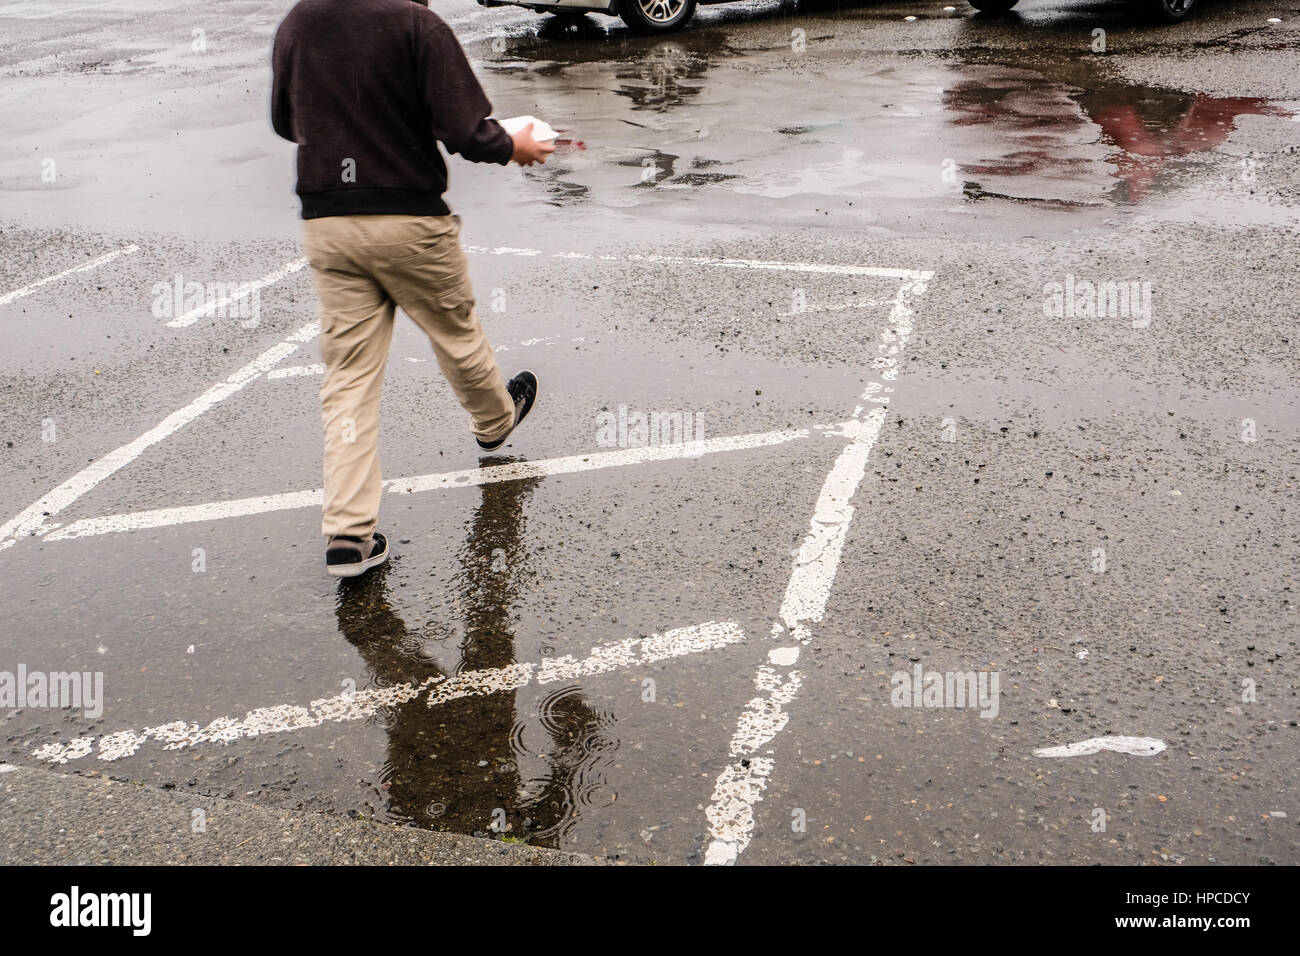 A boy walking in the rain Stock Photo